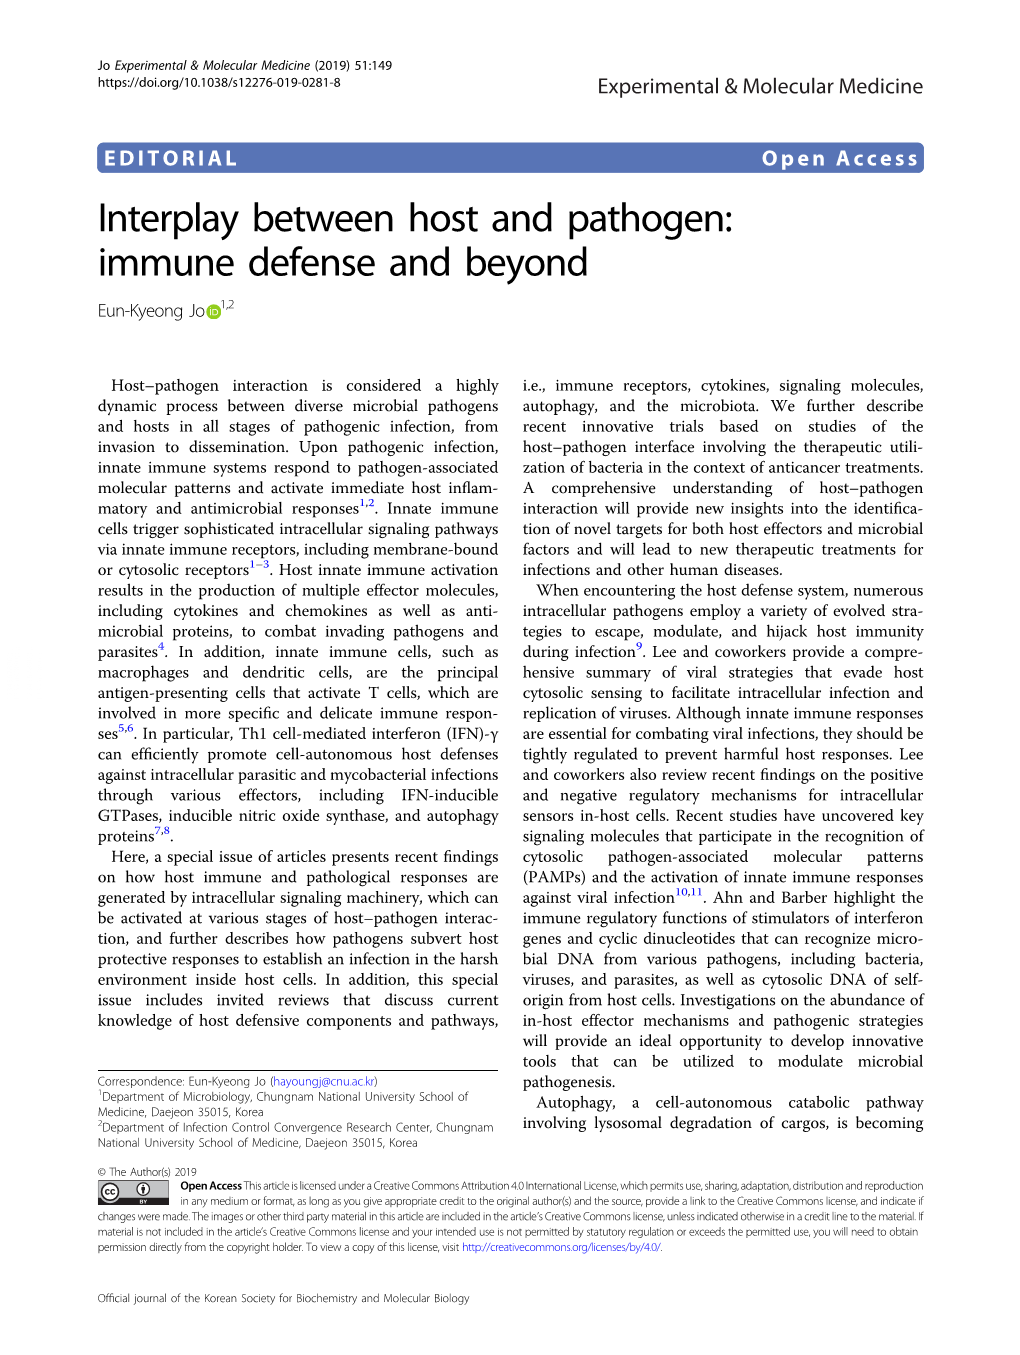 Interplay Between Host and Pathogen: Immune Defense and Beyond Eun-Kyeong Jo 1,2